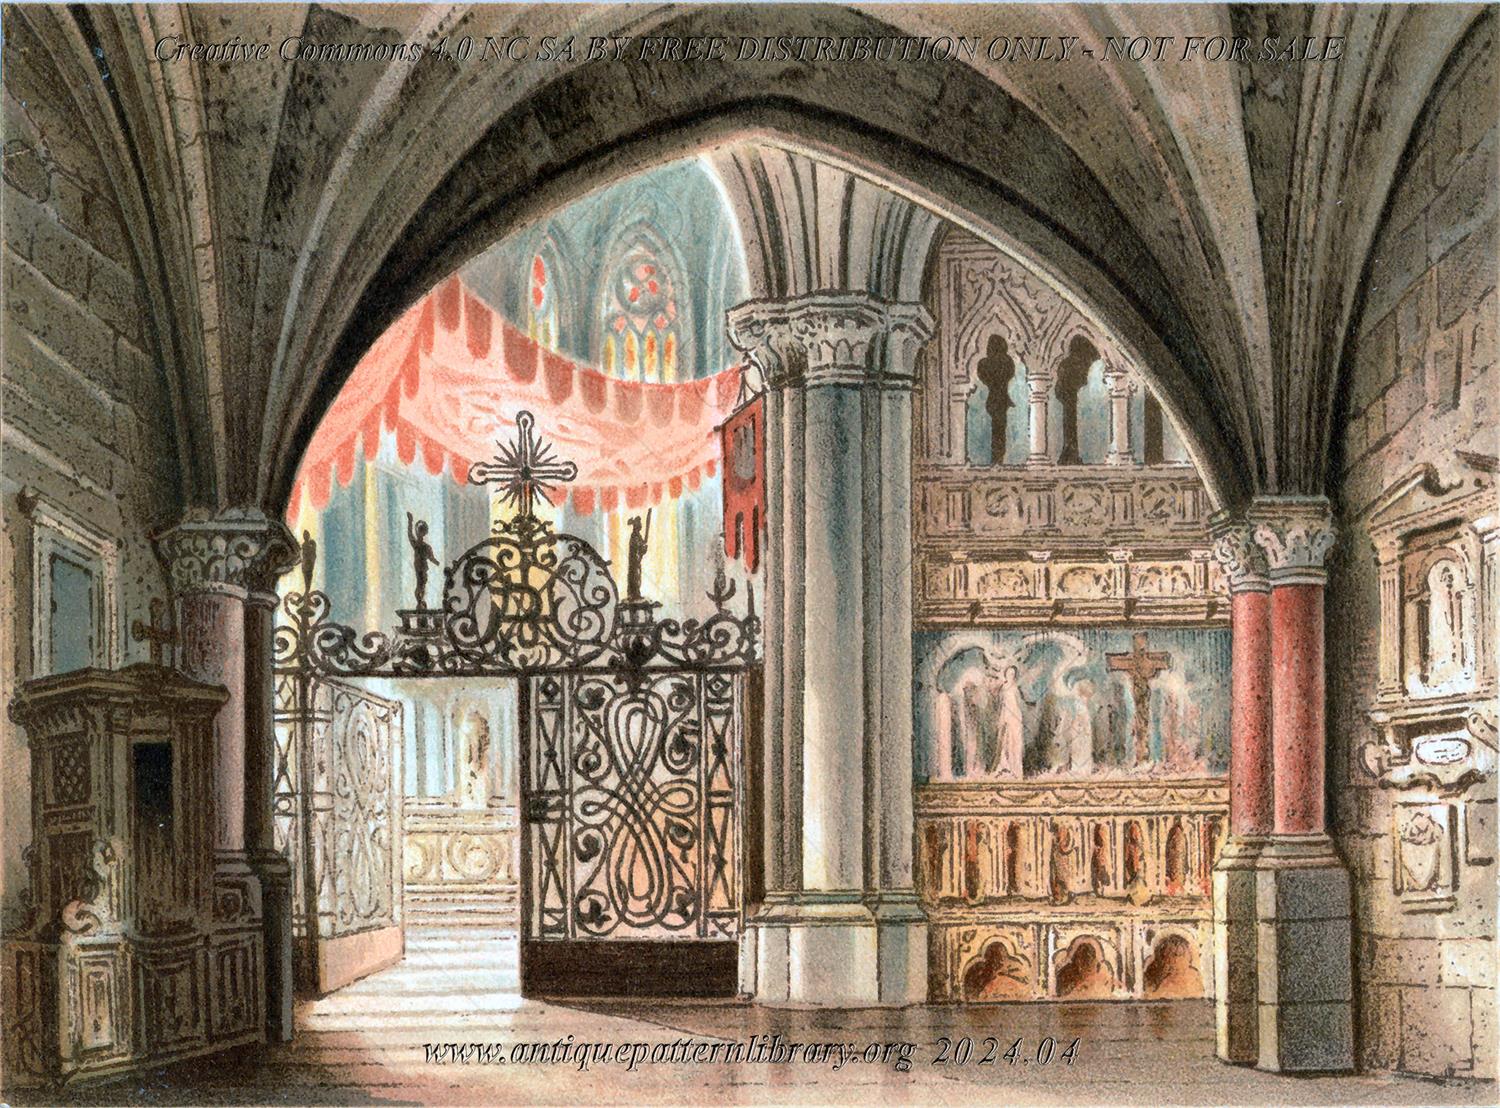 C-YS046 Theater-Decorationen - Goethe's Faust